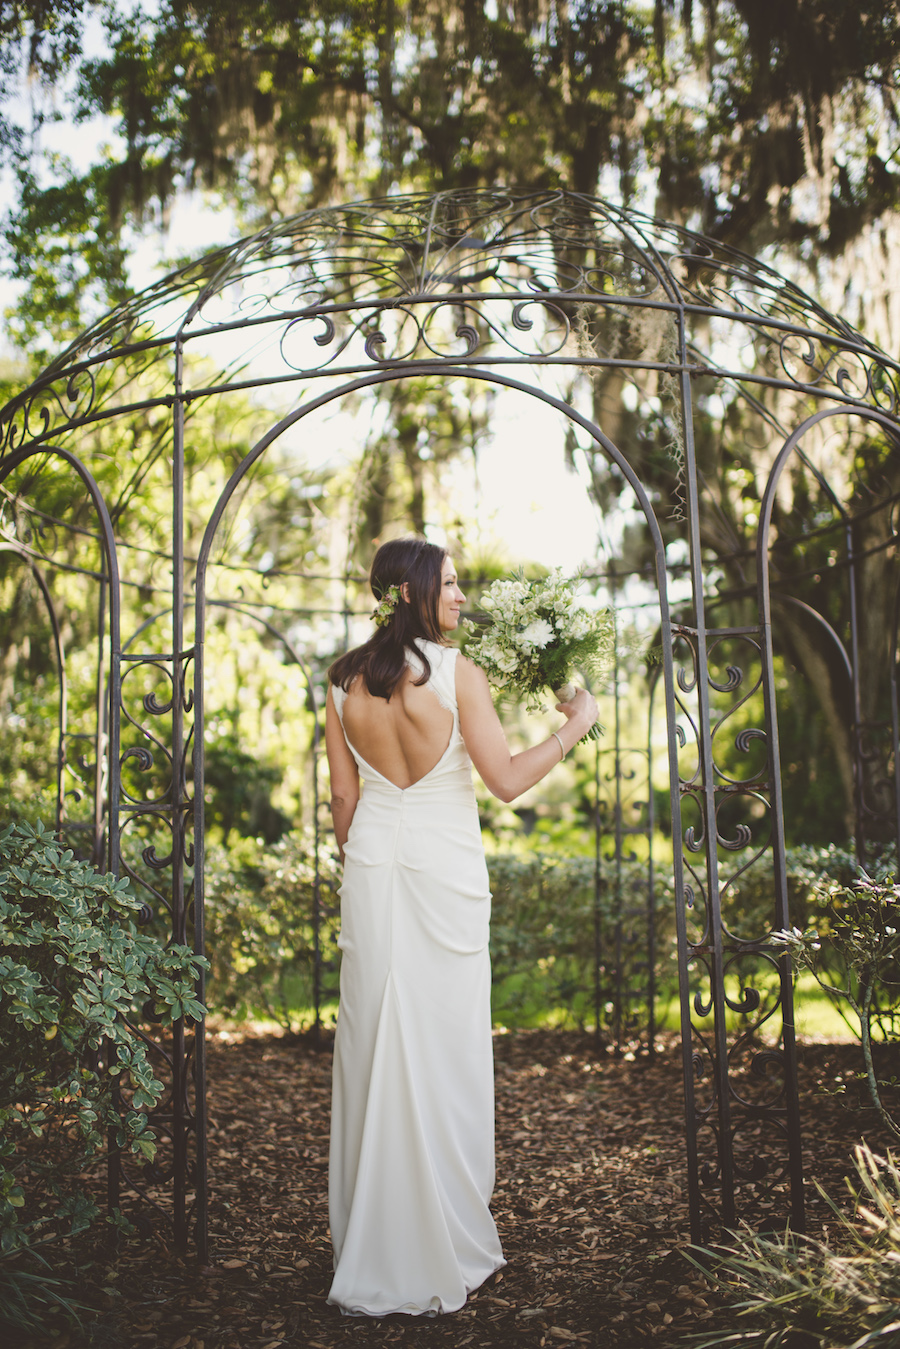 Nicole Miller Open Back Wedding Dress | Rustic Tampa Wedding at Cross Creek Ranch